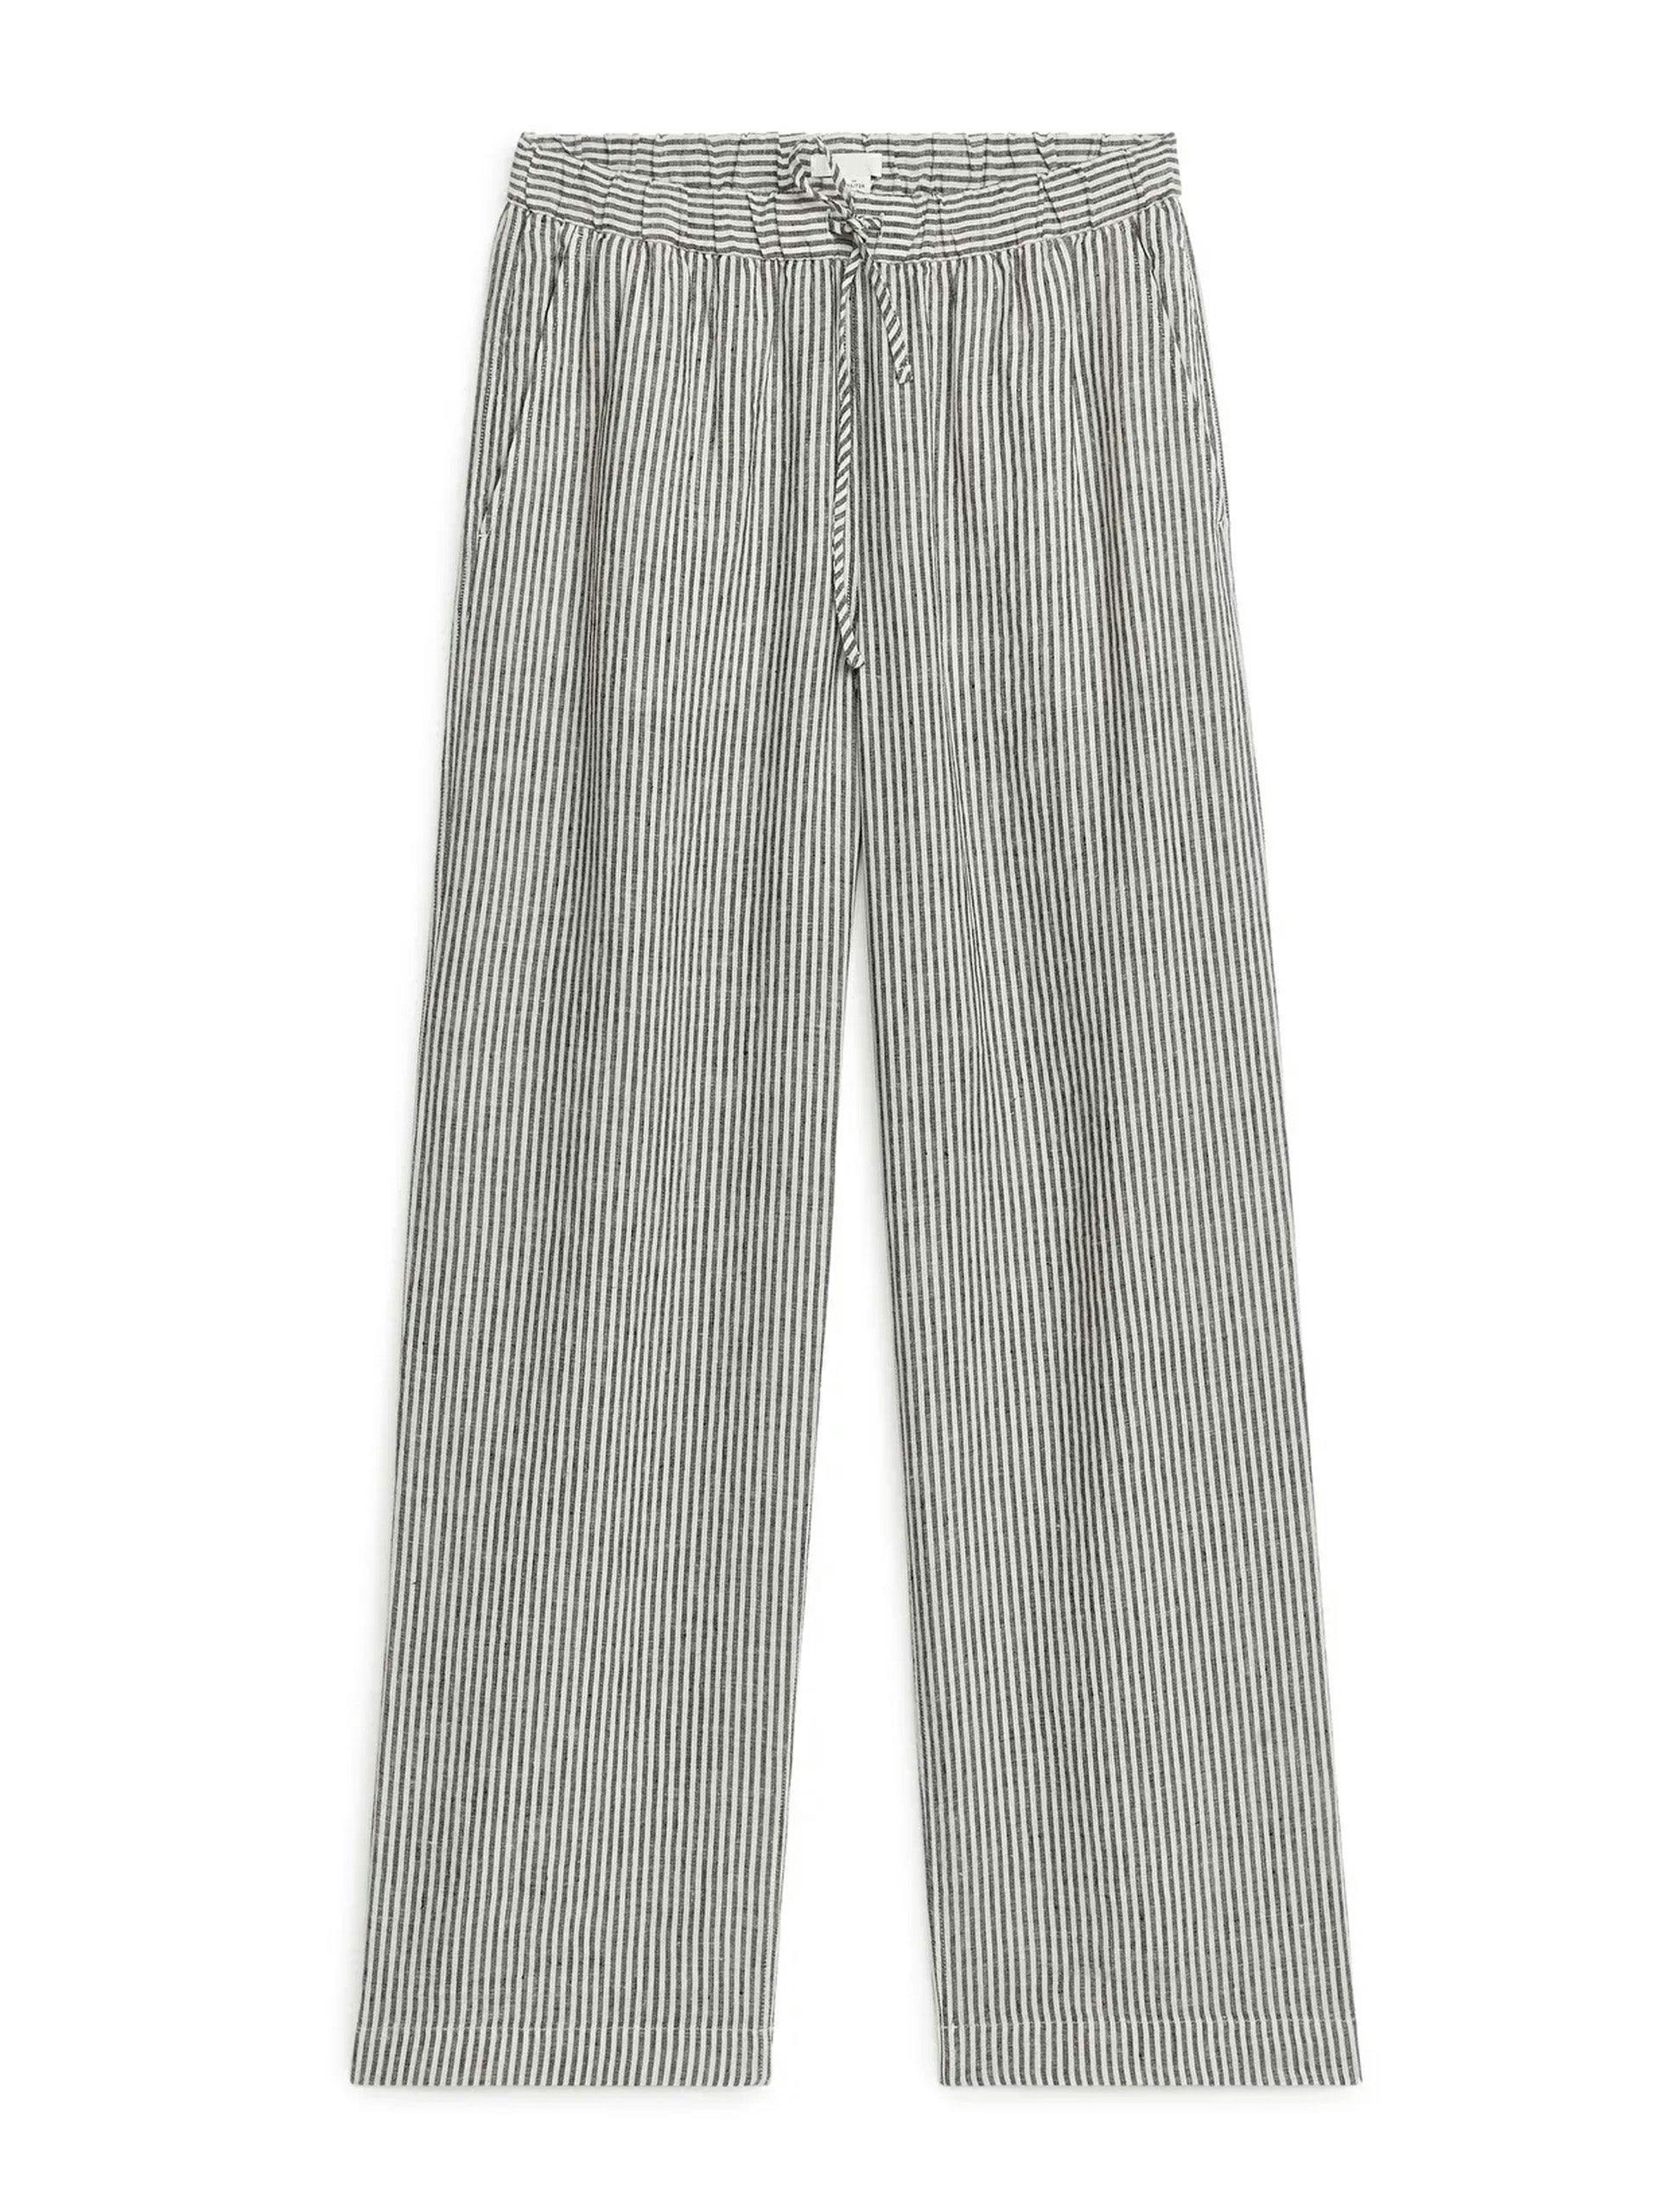 Striped linen drawstring trousers